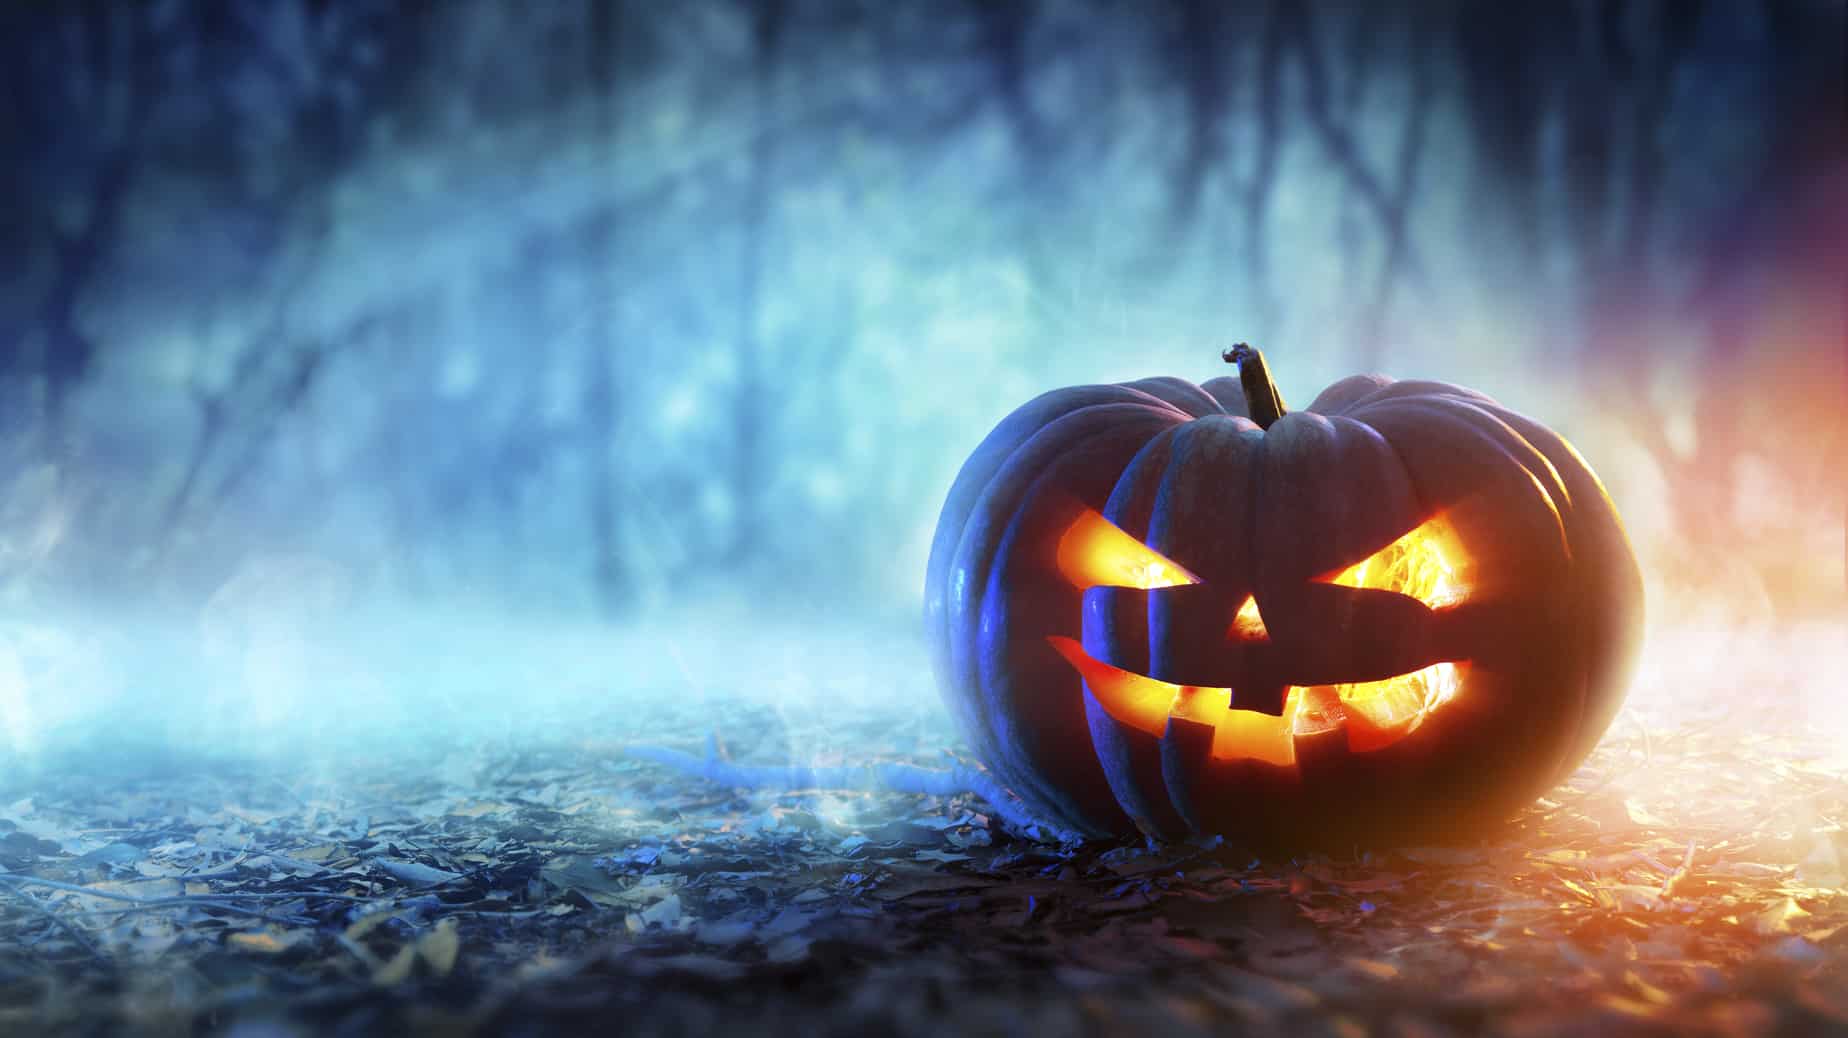 Top 5 Movies To Watch This Halloween Season